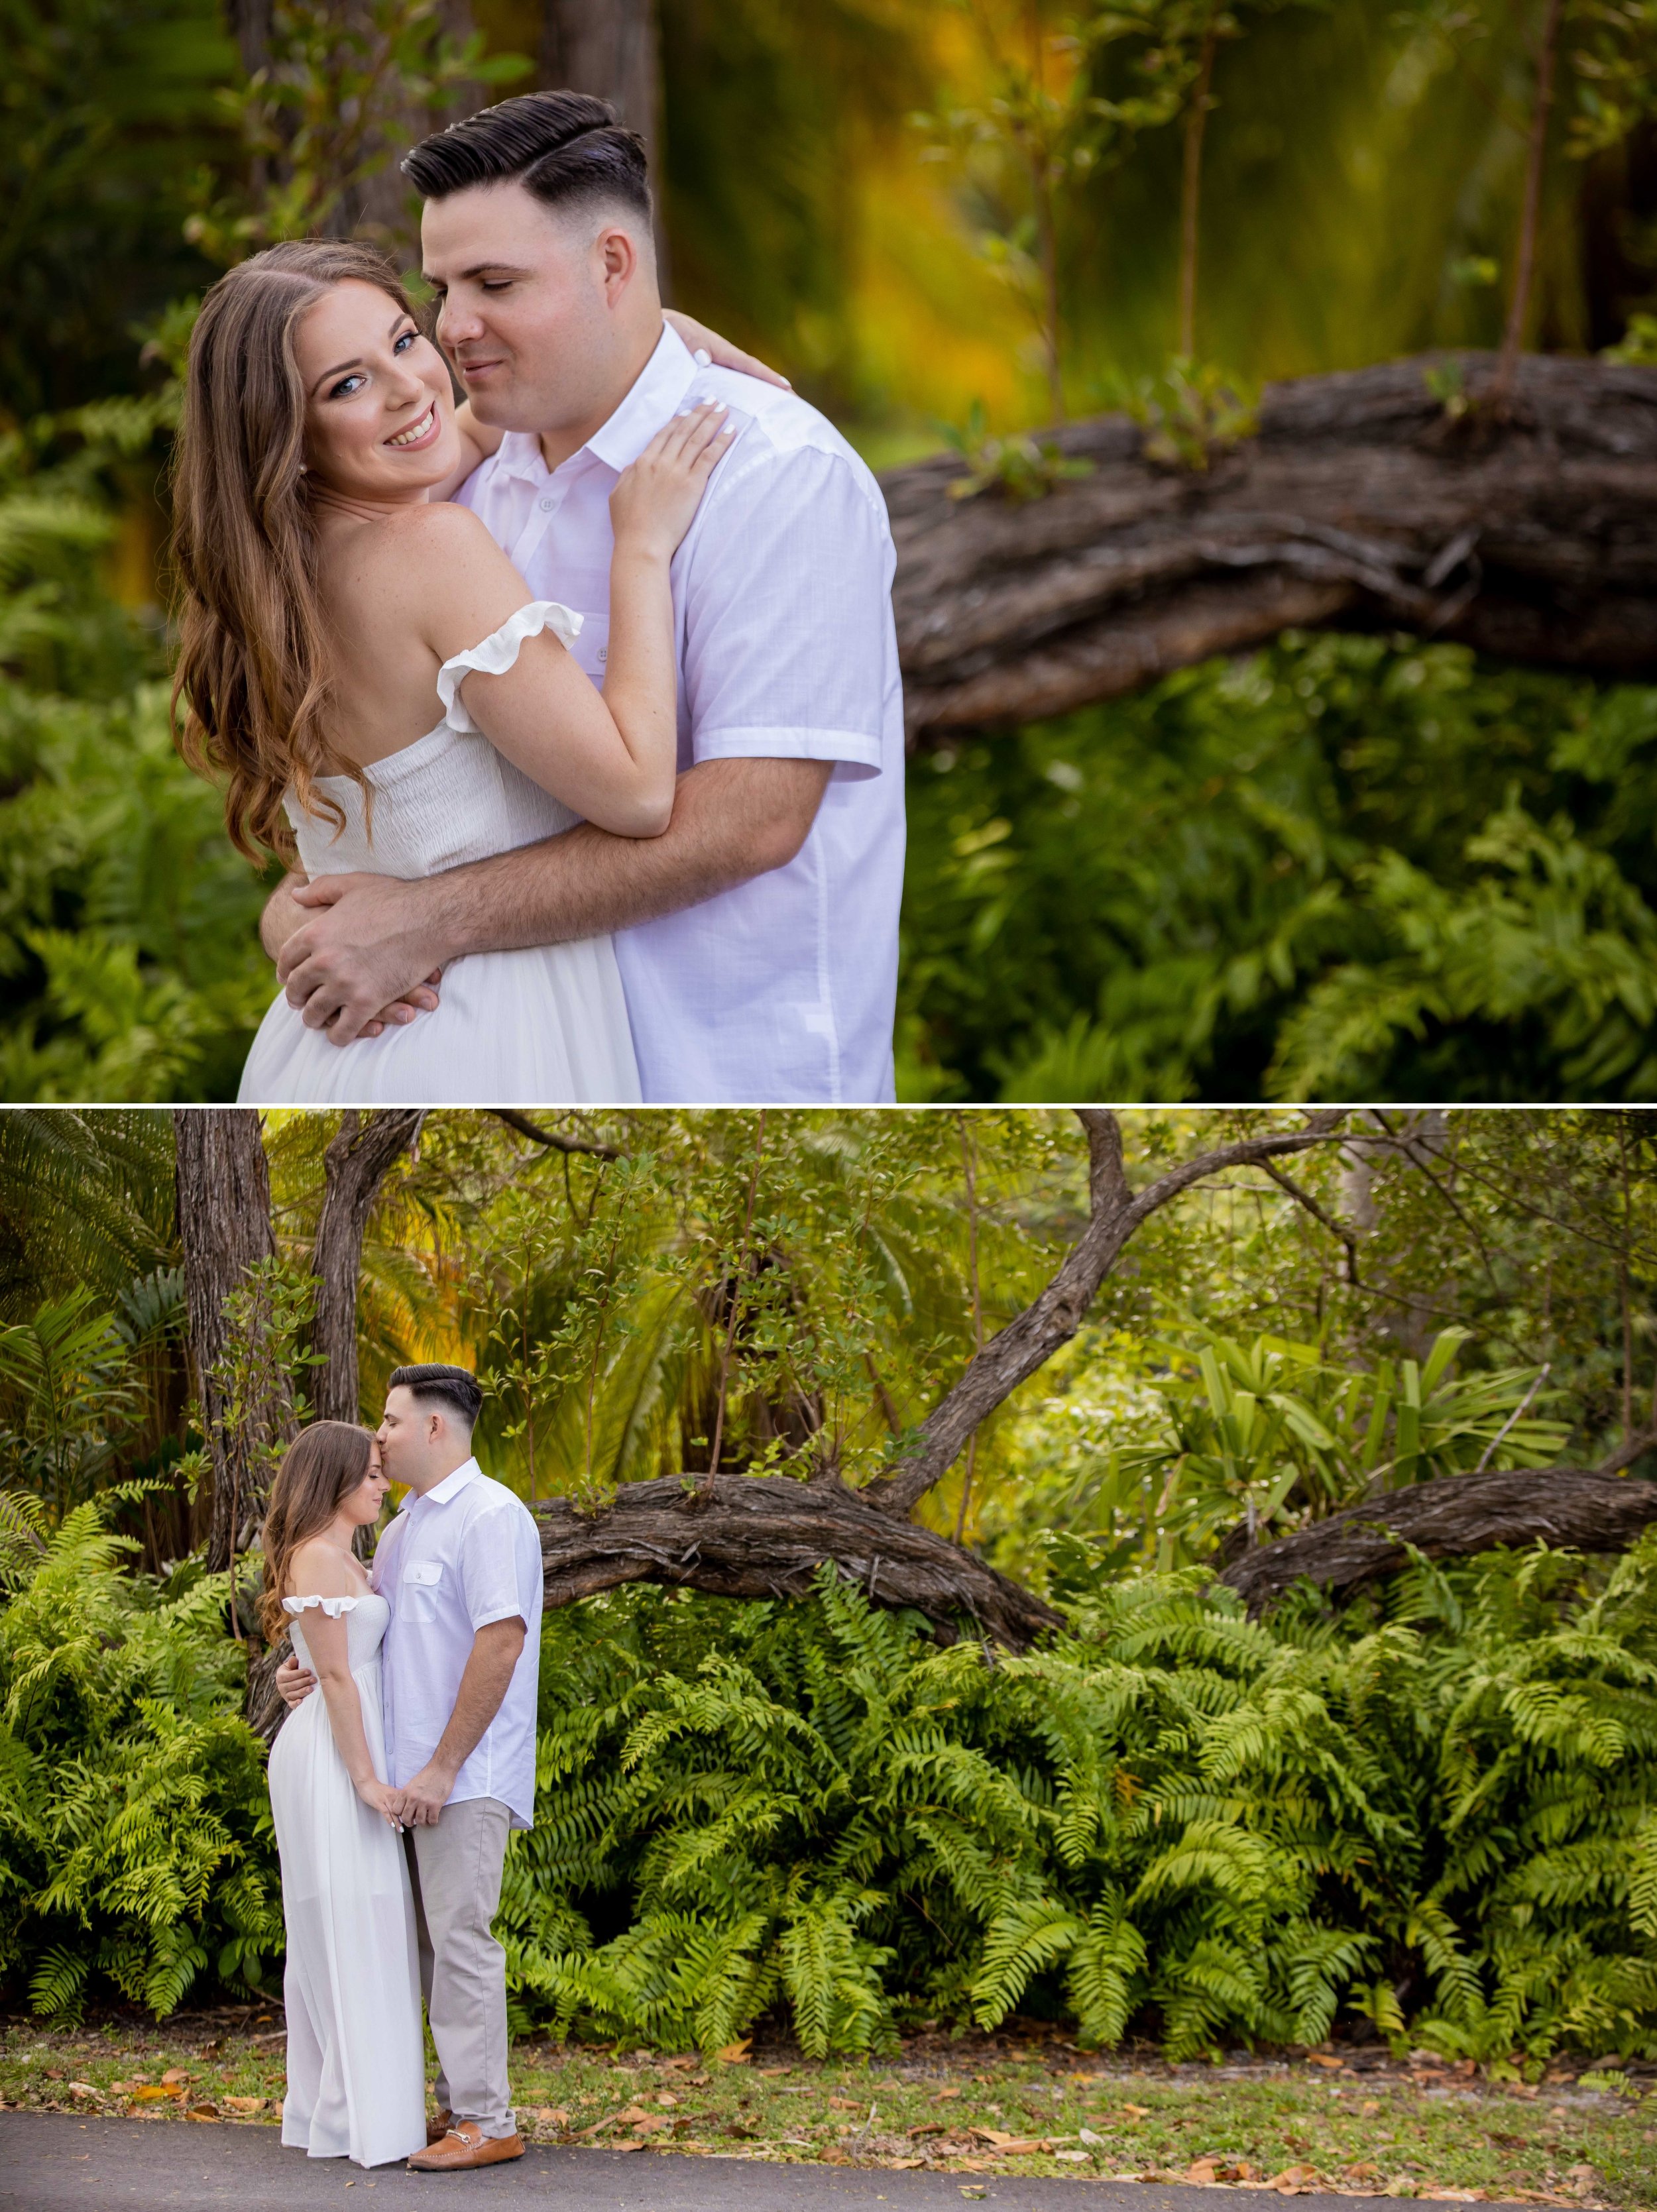 Engagement Session at Crandon Park - Miami Wedding Photographers - Santy Martinez 1.jpg